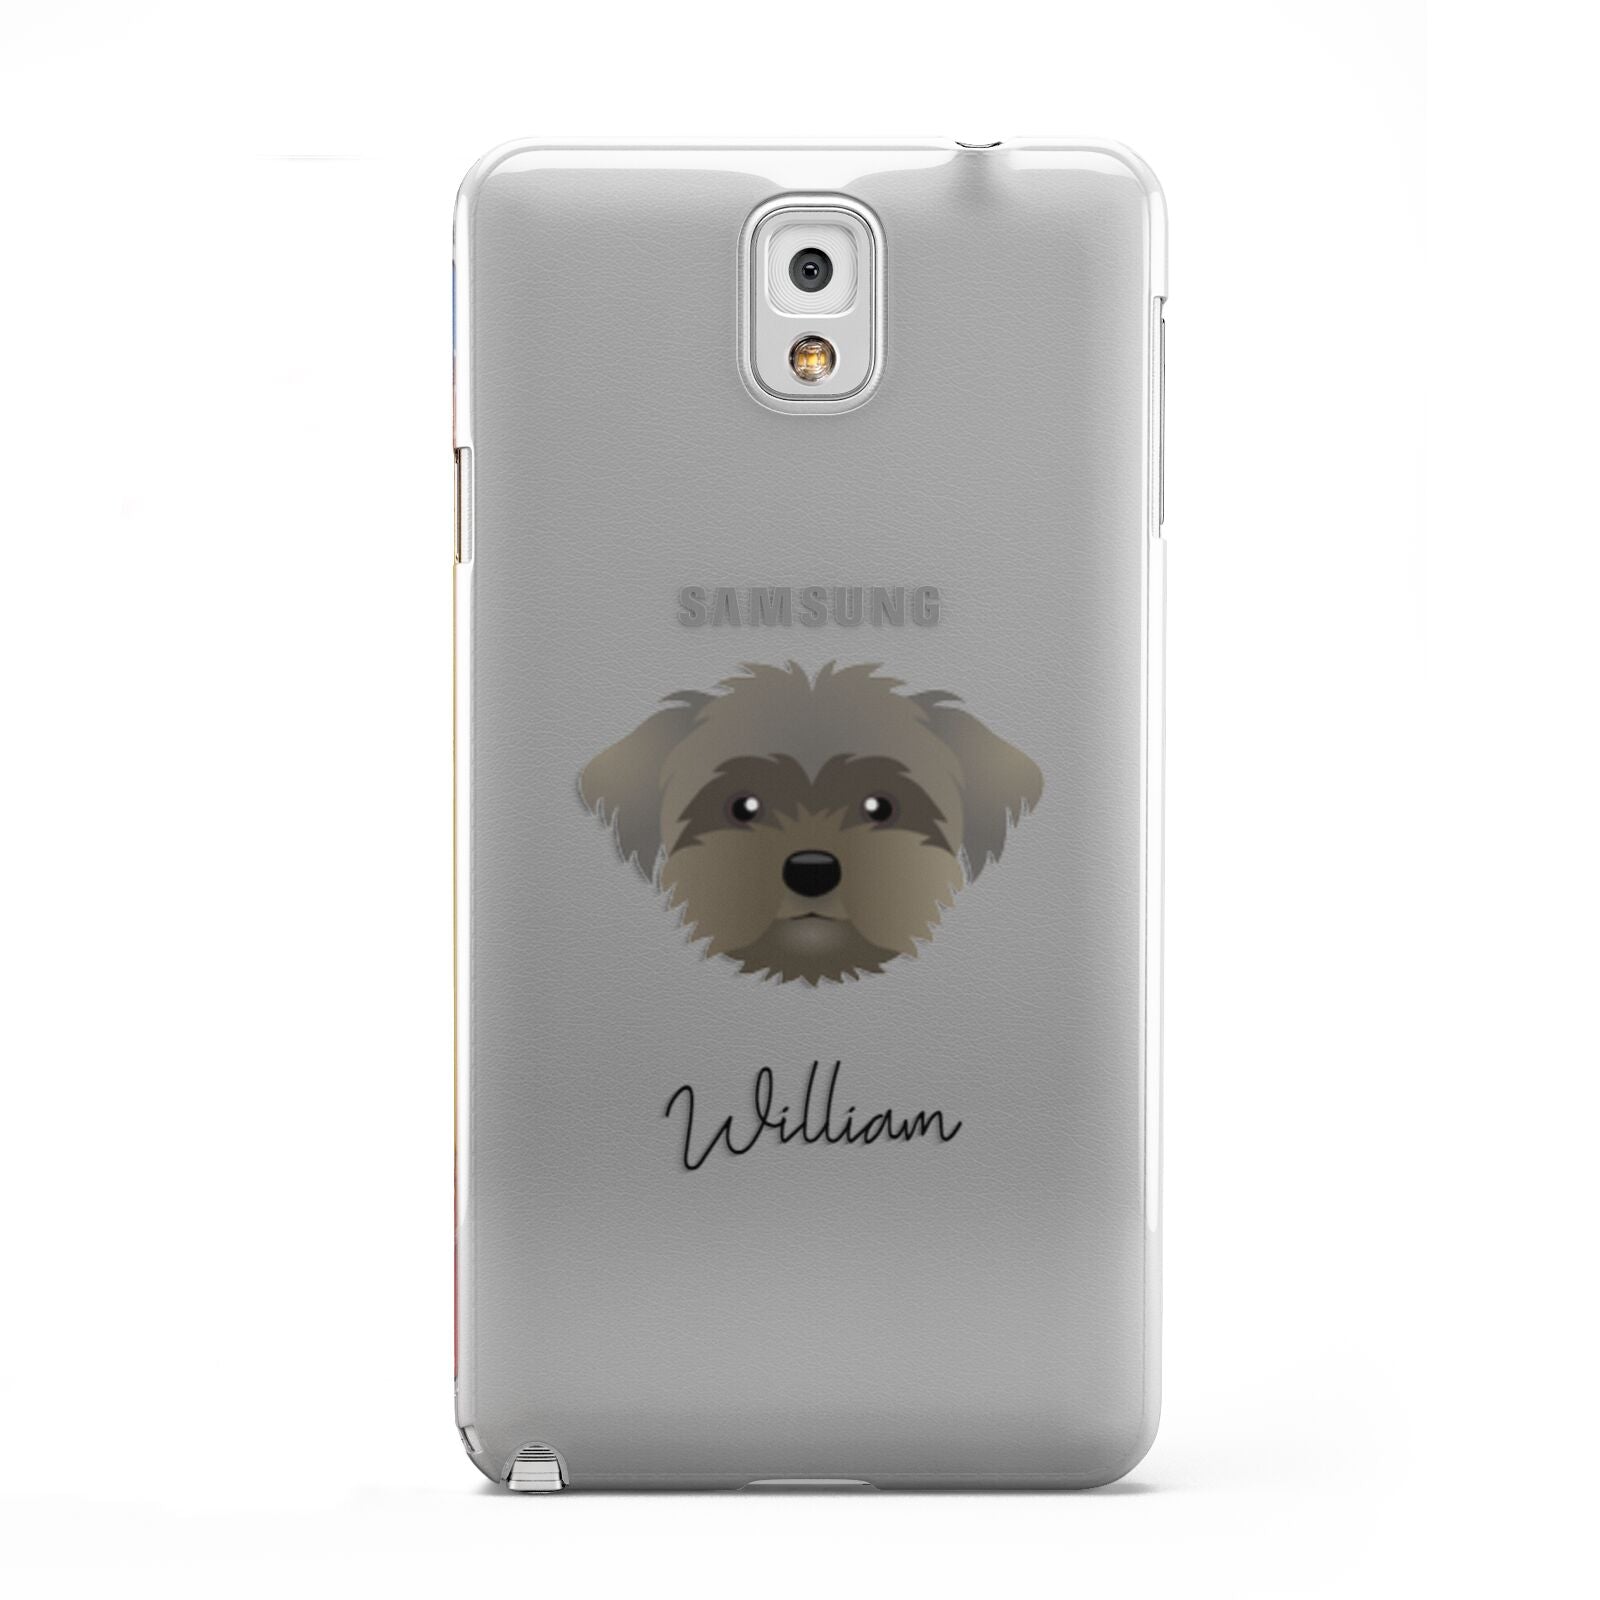 Peek a poo Personalised Samsung Galaxy Note 3 Case